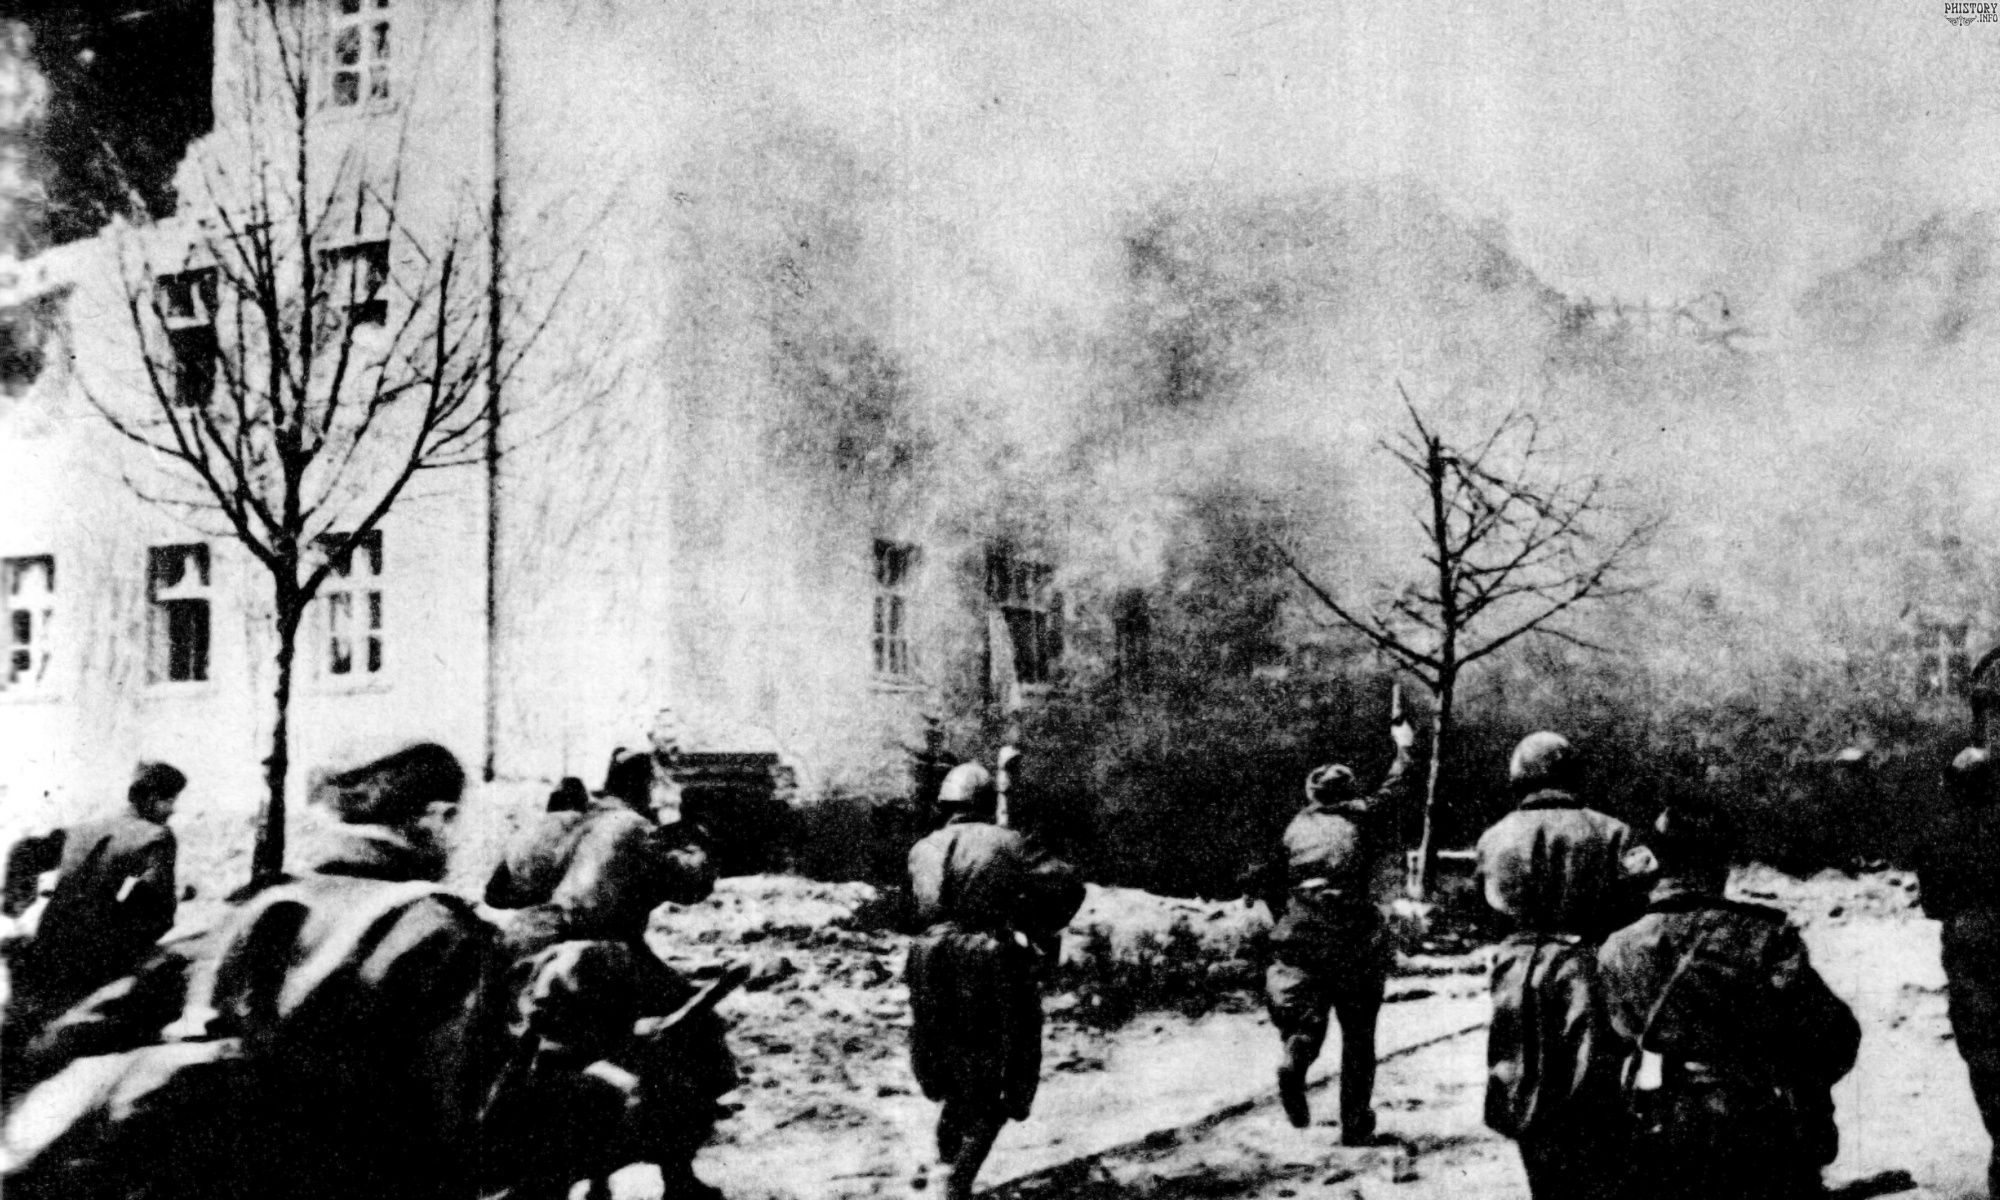 День штурма кенигсберга. Штурм Кенигсберга 6-9 апреля 1945. Восточная Пруссия 9 апреля 1945. Восточная Пруссия 1945 год взятие Кенигсберга.